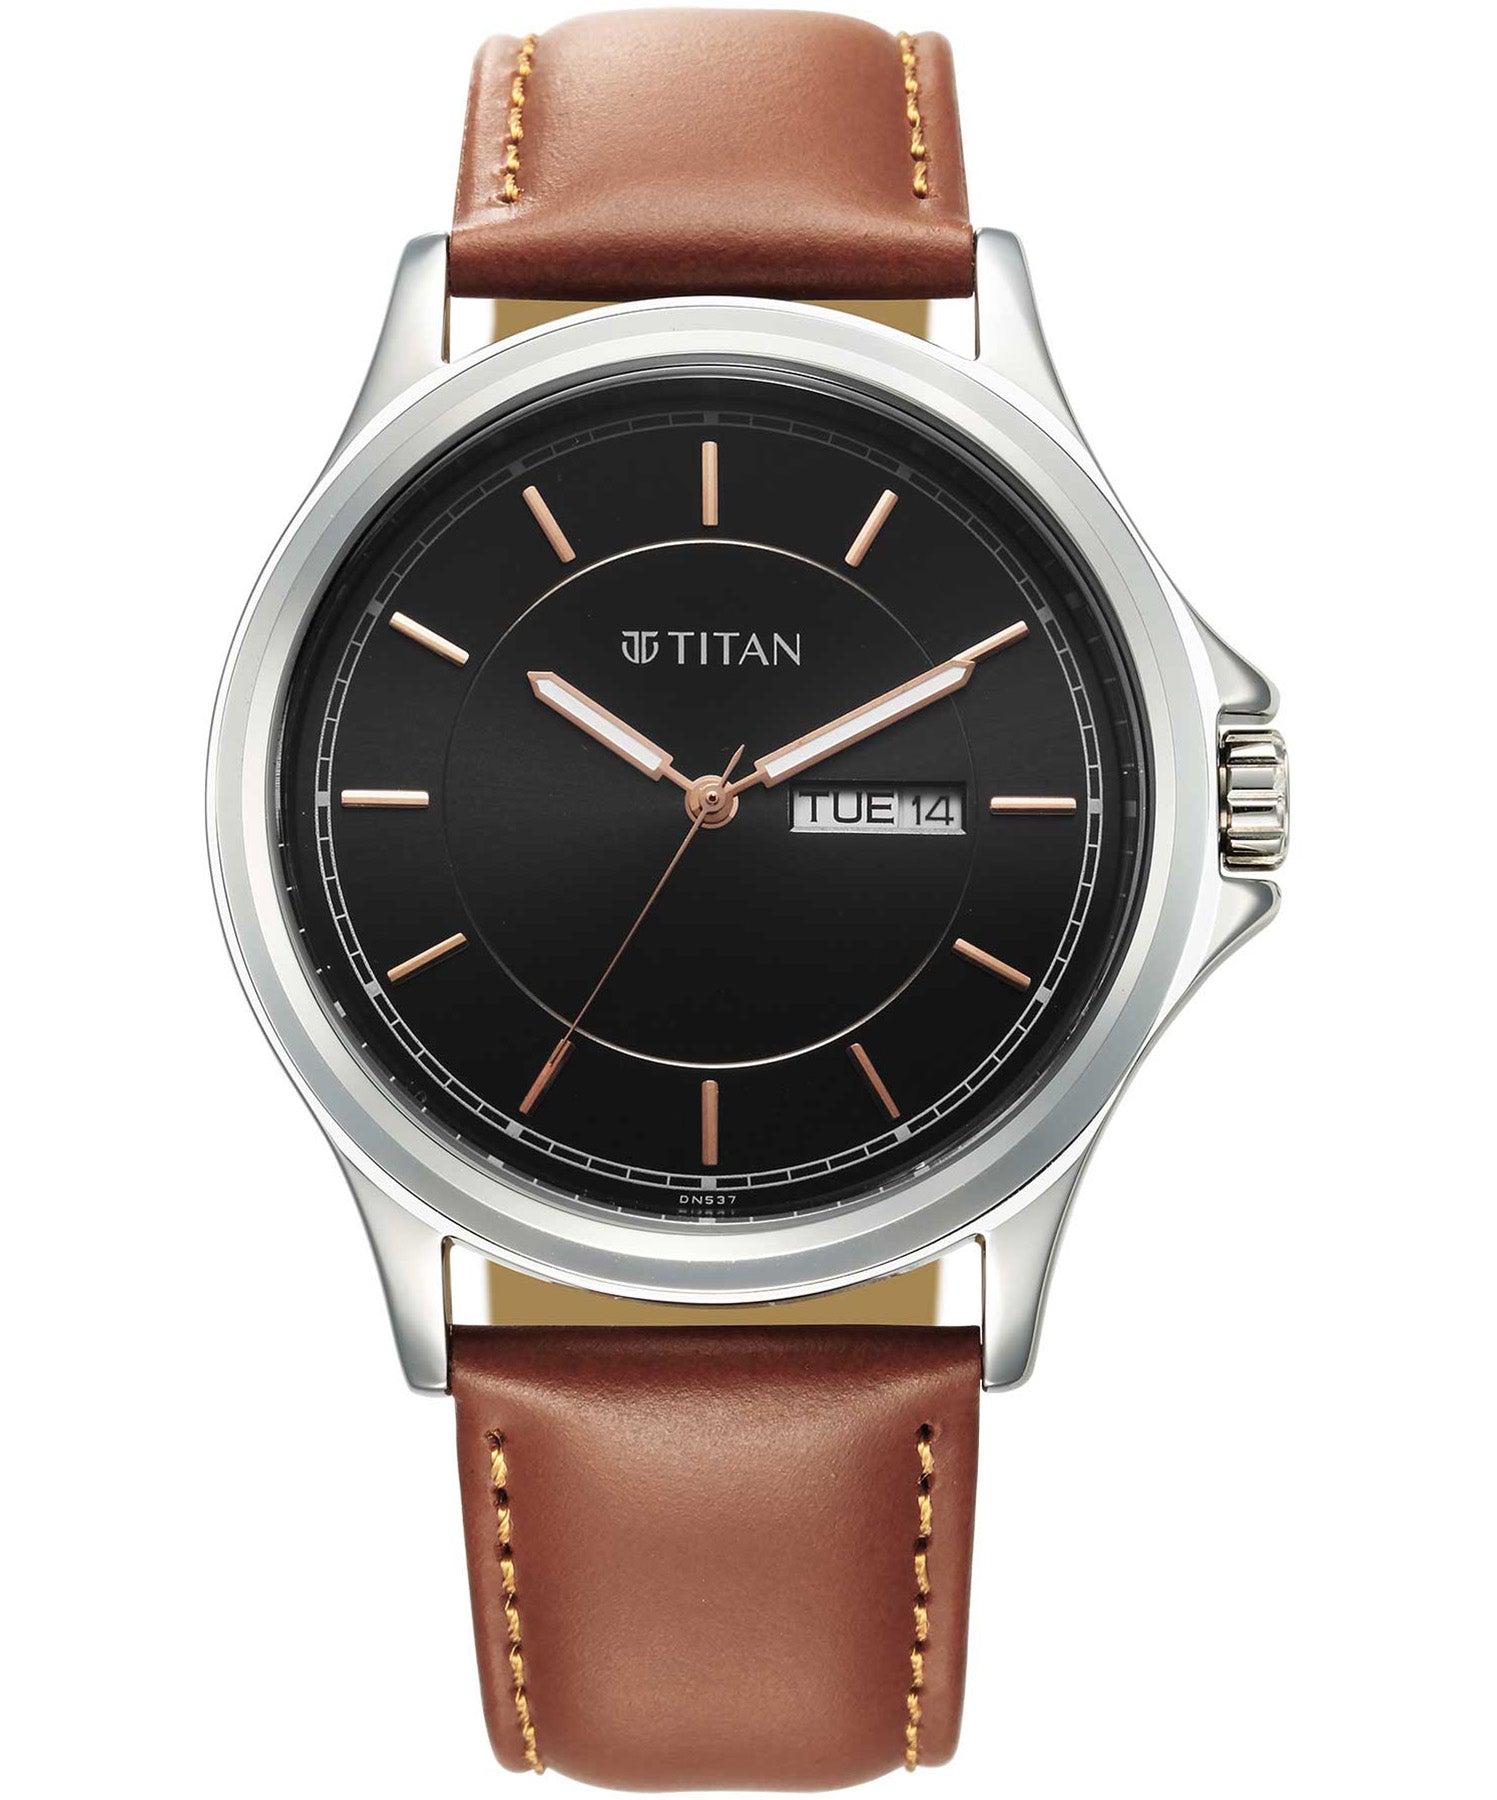 Titan Black Dial Brown Leather Strap Analog Watch for Men, 1870SL05